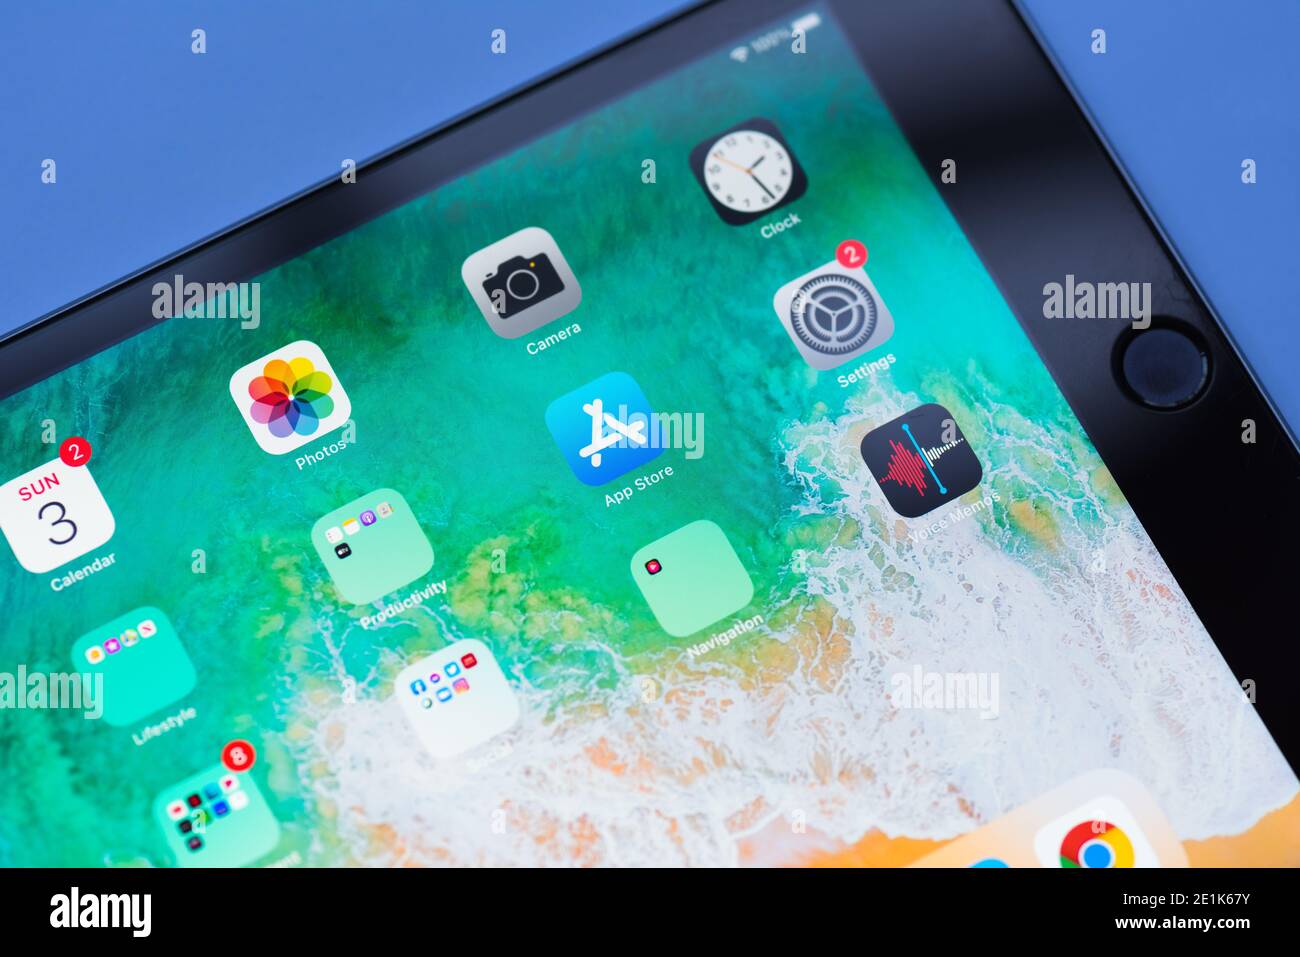 iPad with apps Stock Photo